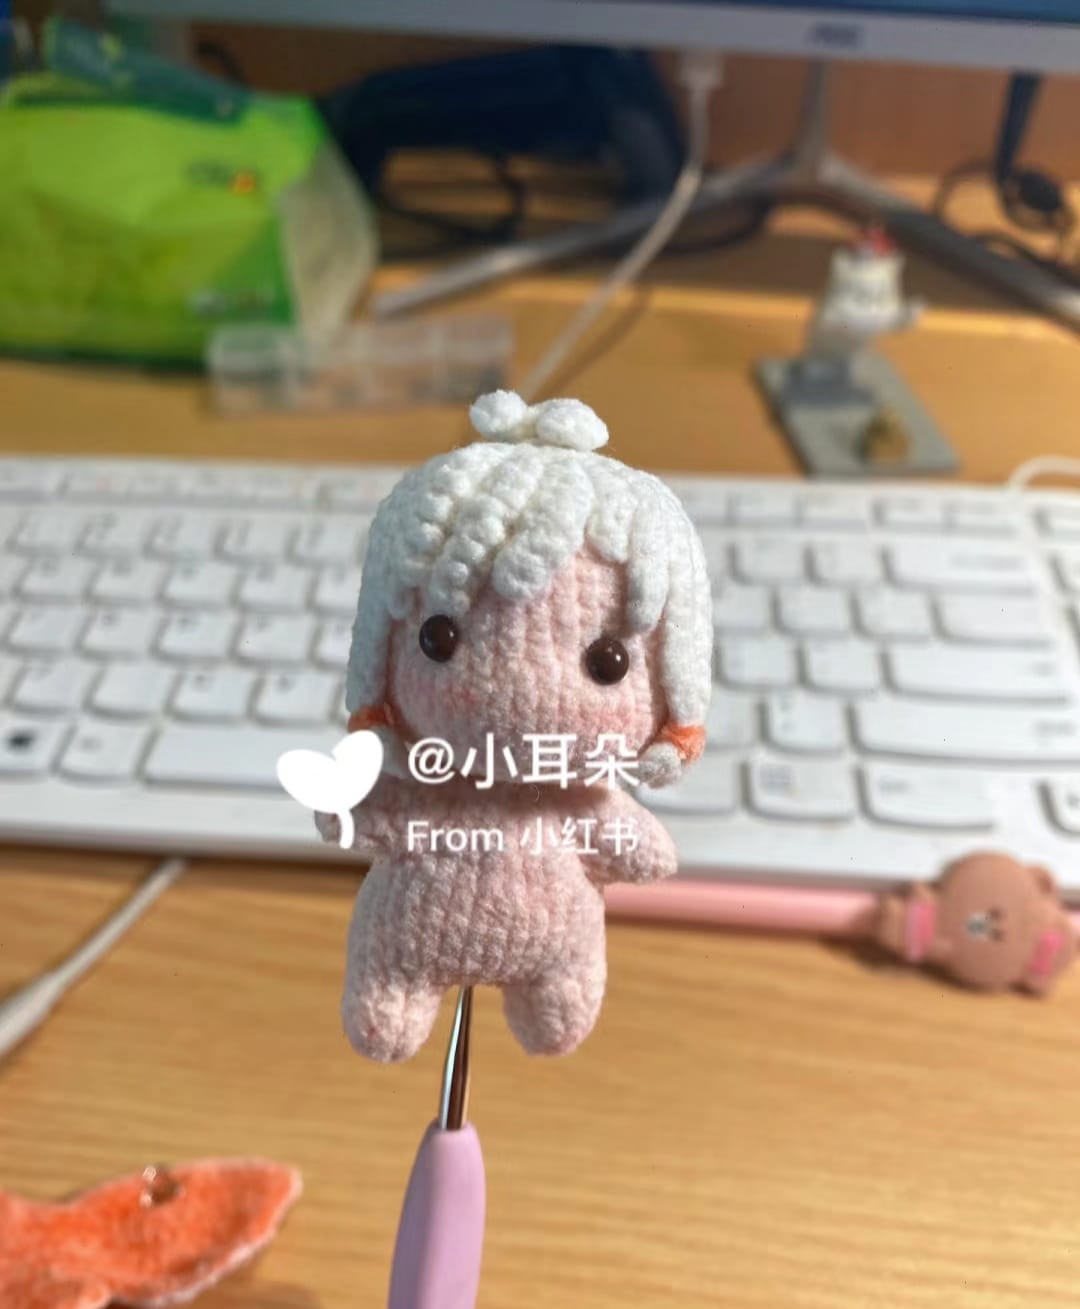 white hair doll wearing pink crochet pattern